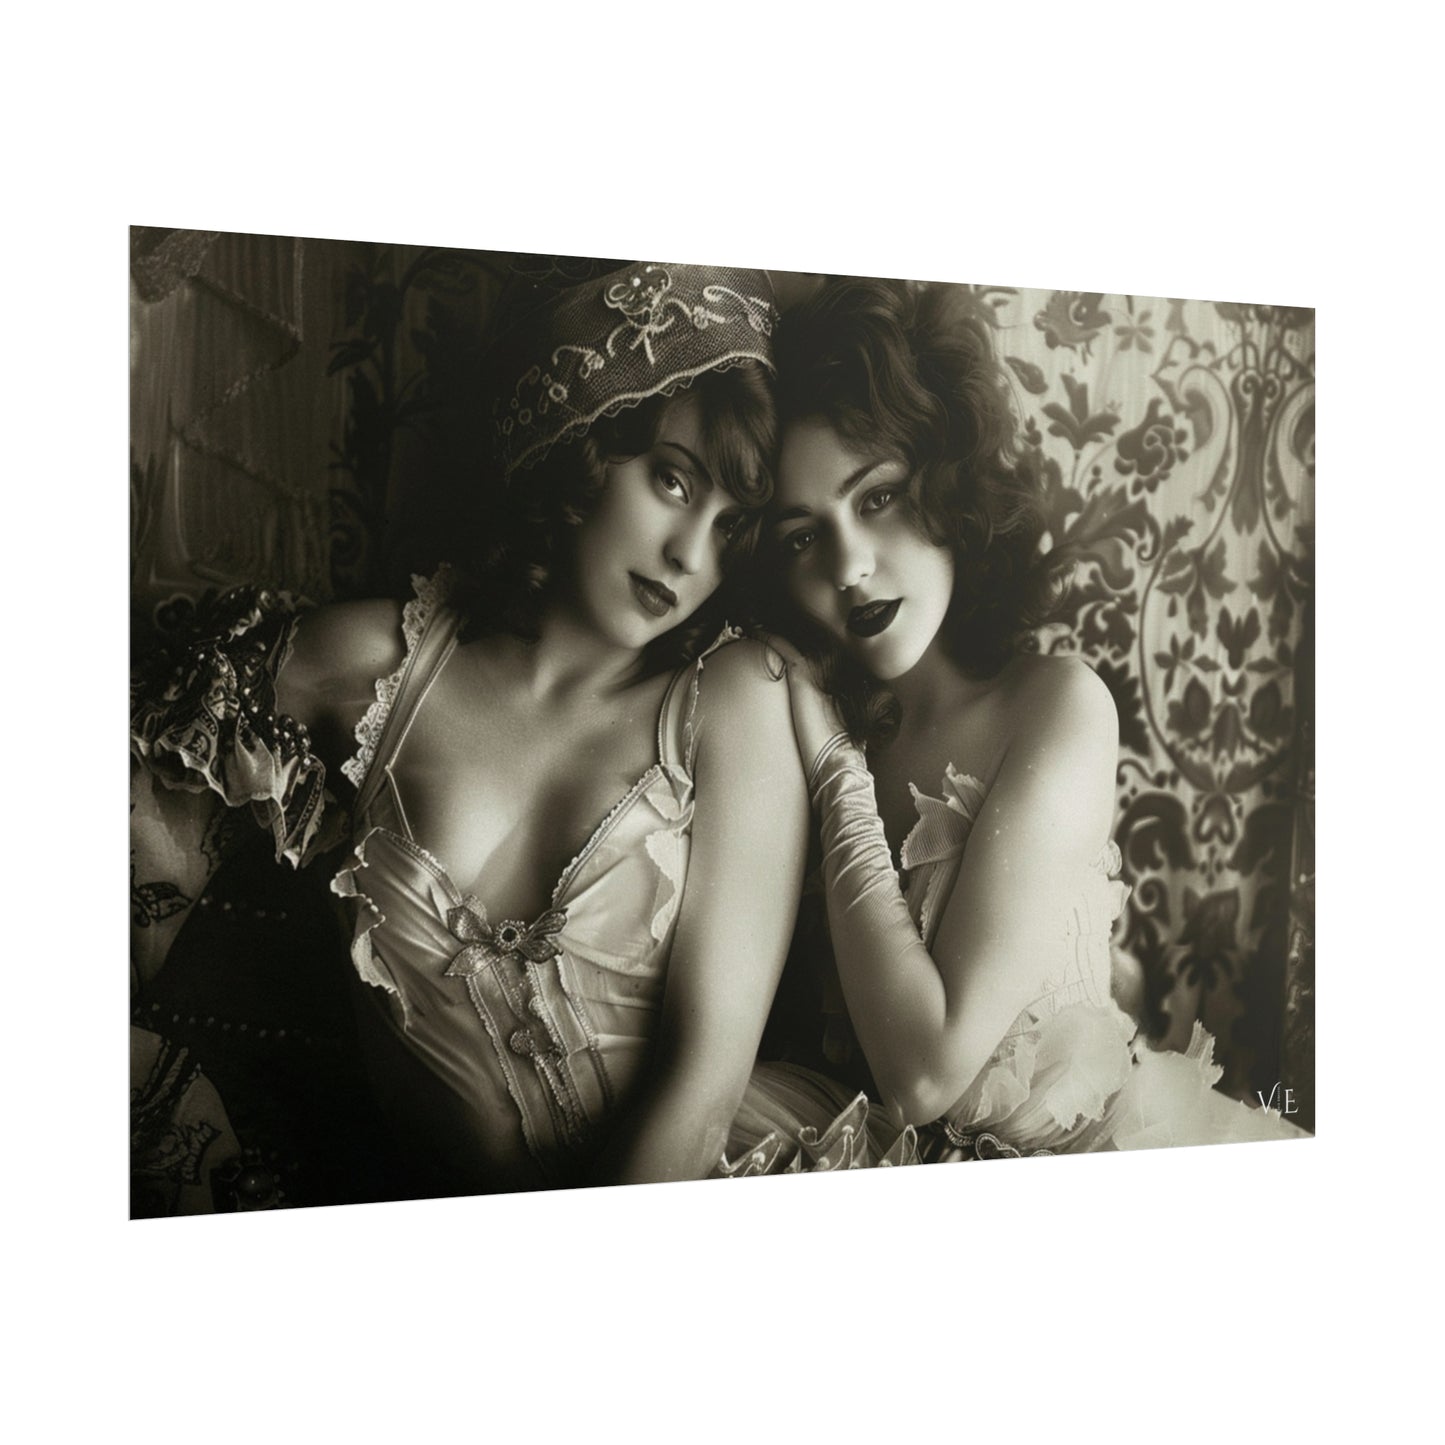 Poster of Beautiful Ladies - Vintage Erotica Lingerie